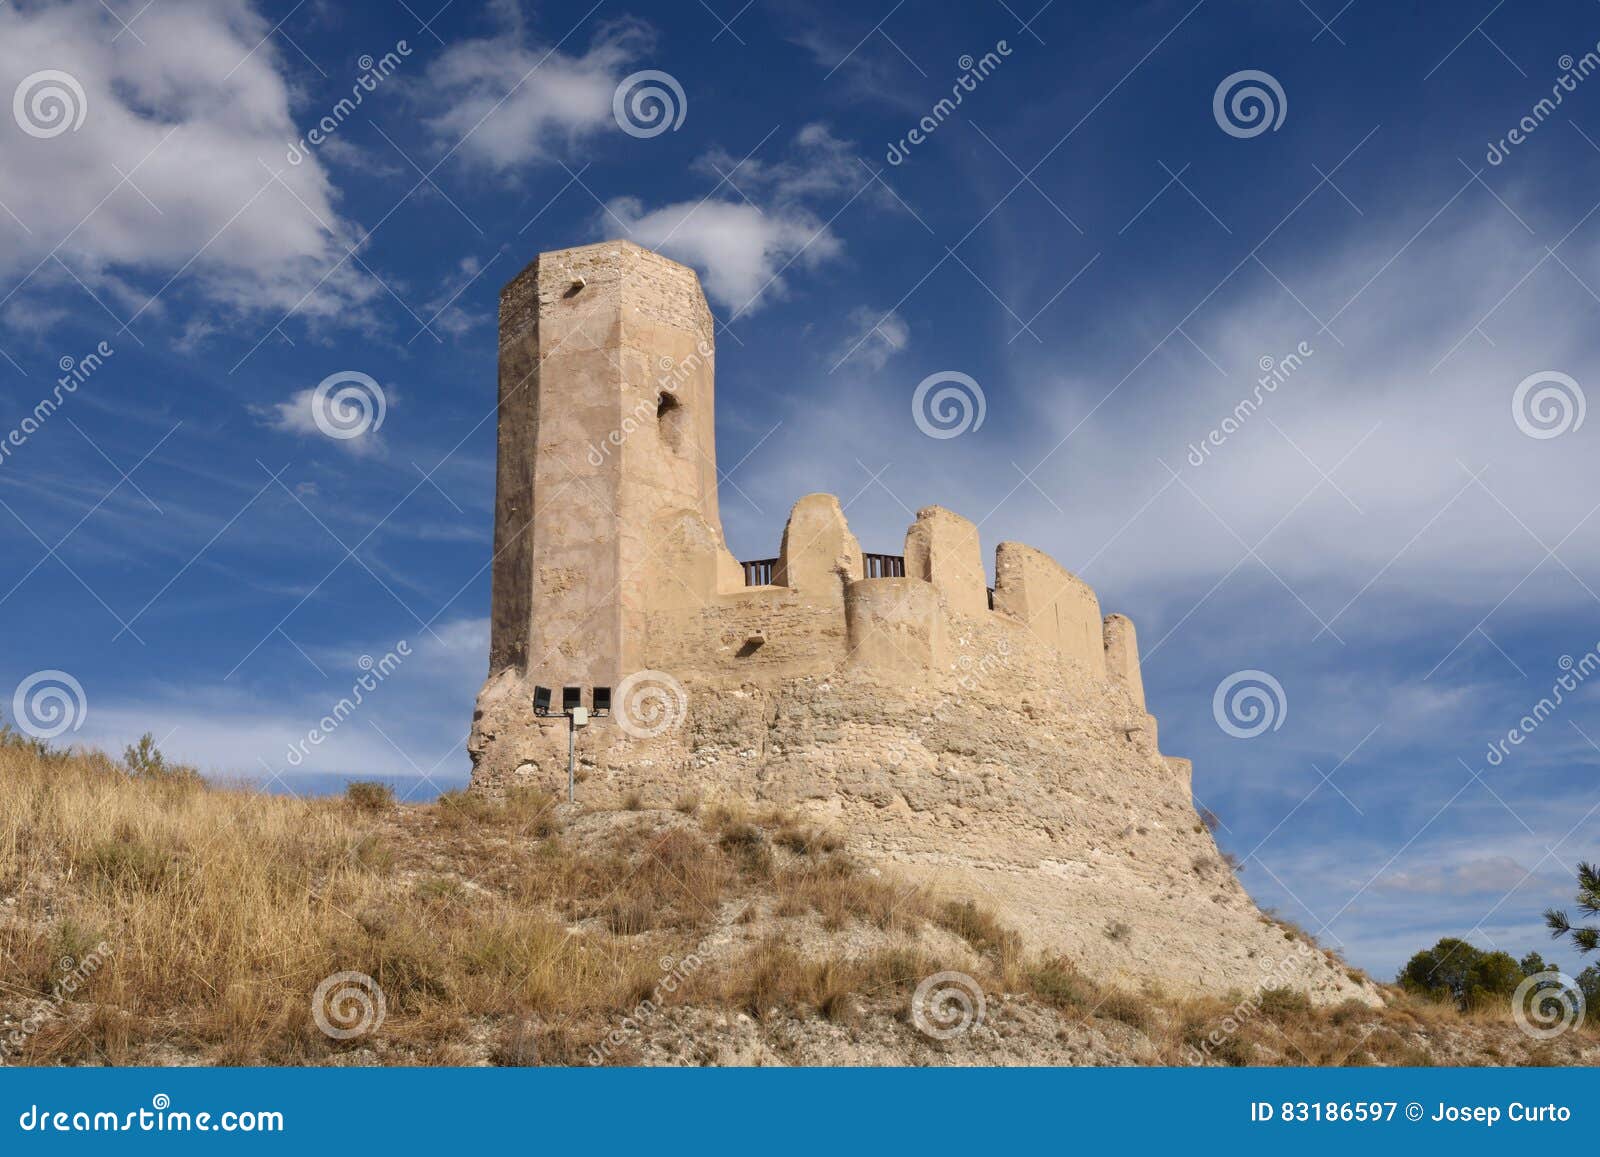 castle of ayab in calatayud, zaragoza province,